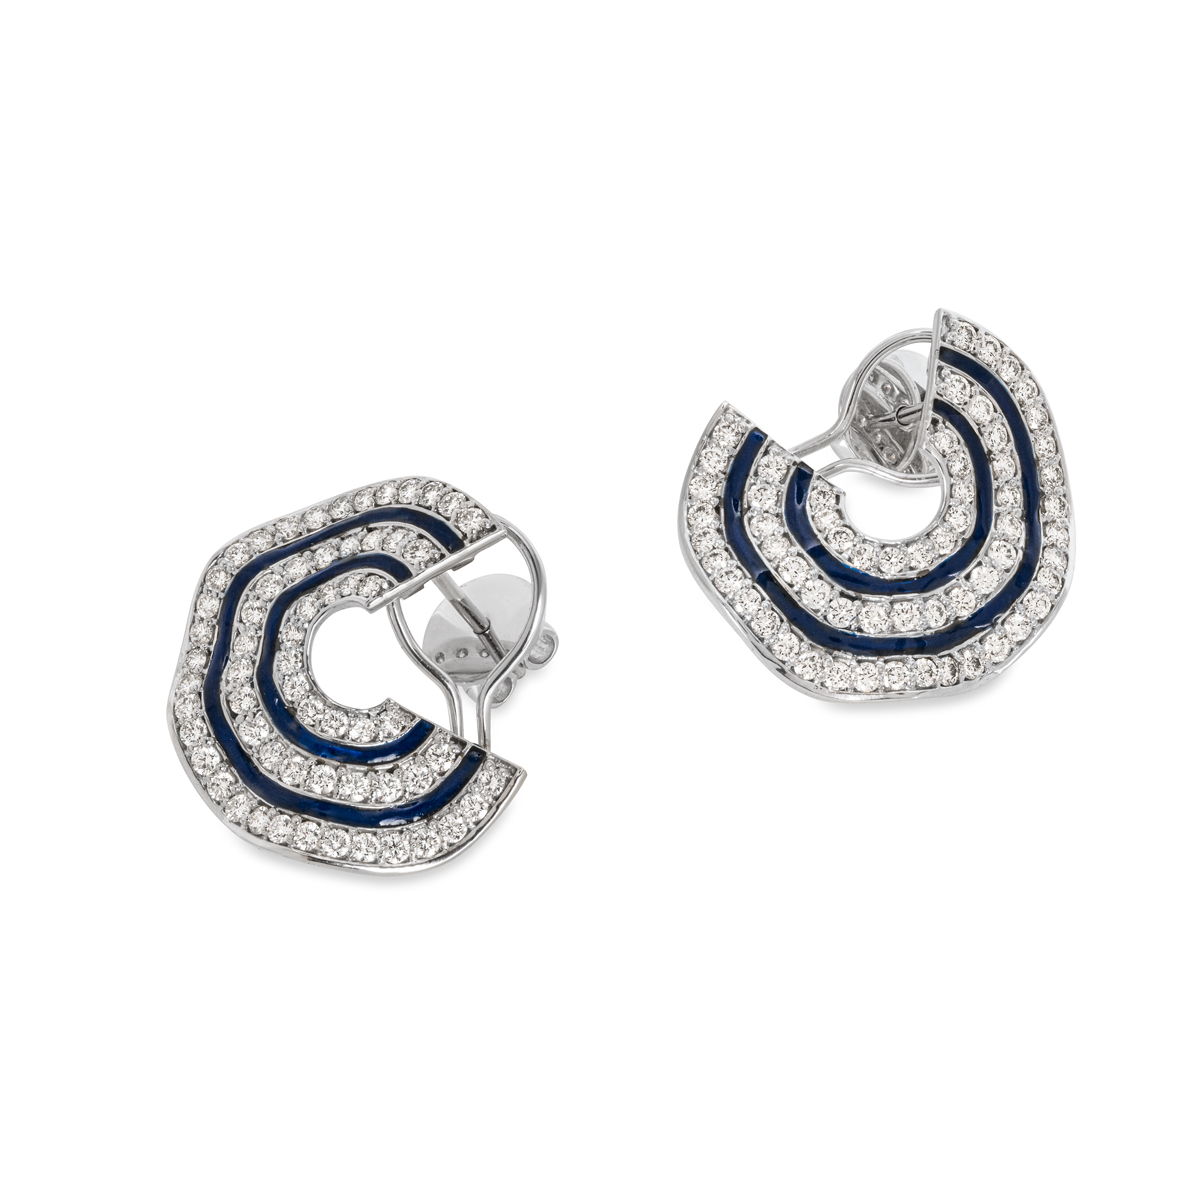 White Gold Diamond and Enamel Earrings 3.28ct